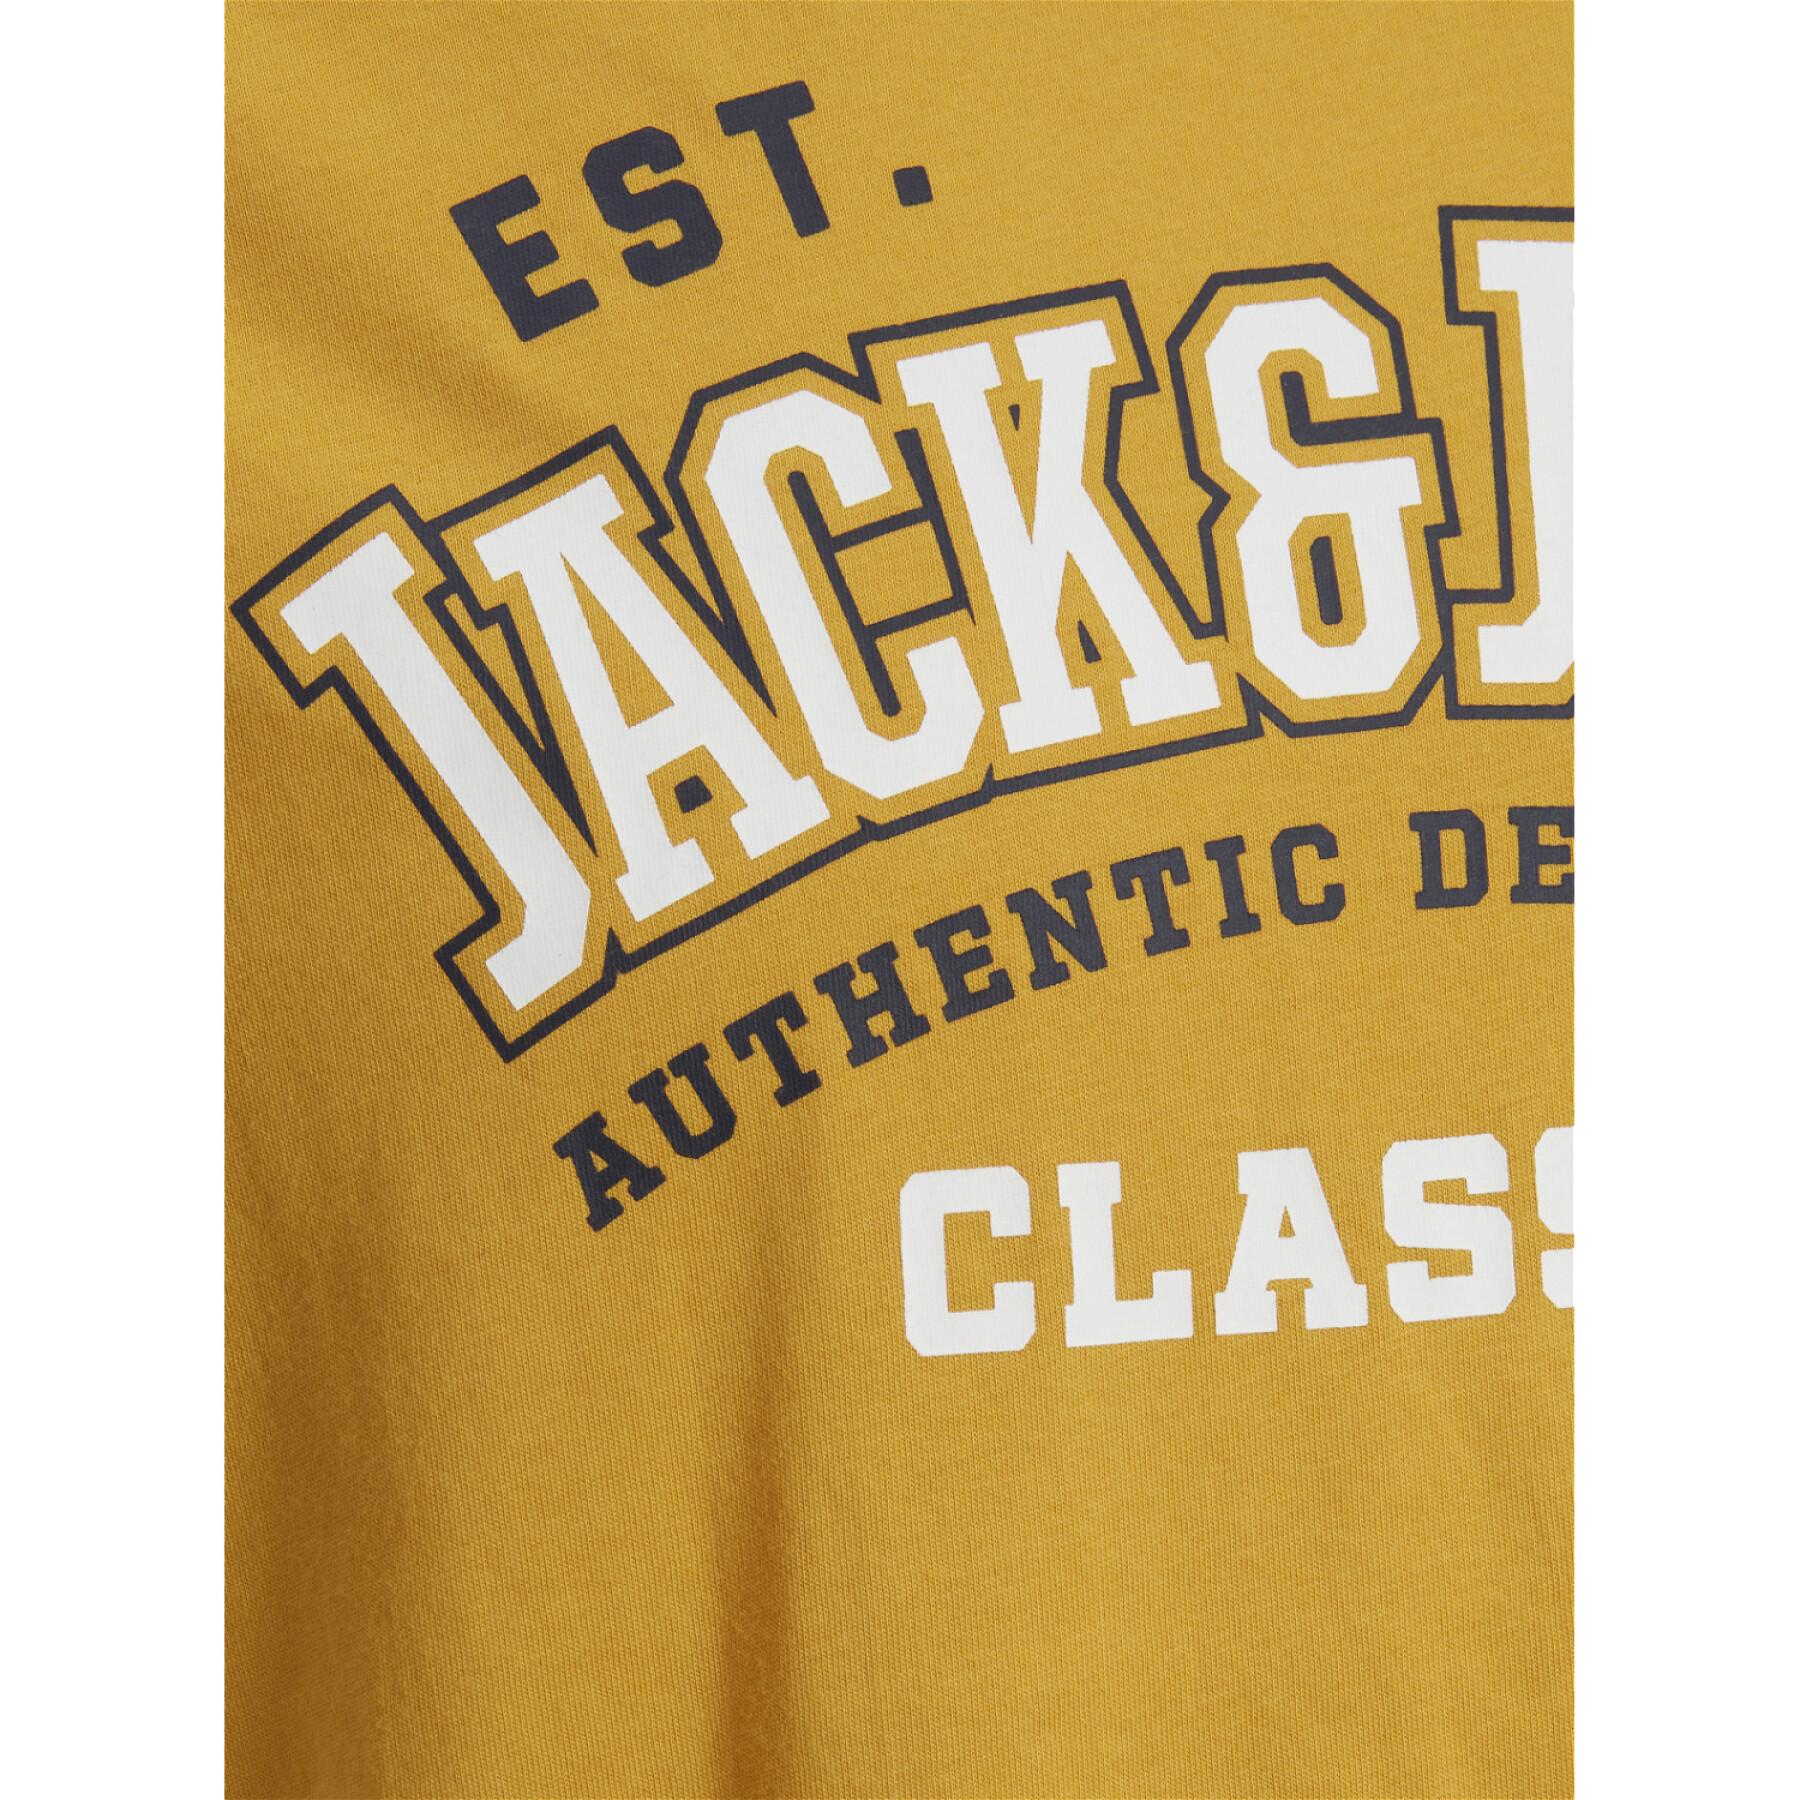 Kinder-T-shirt Jack & Jones Logo